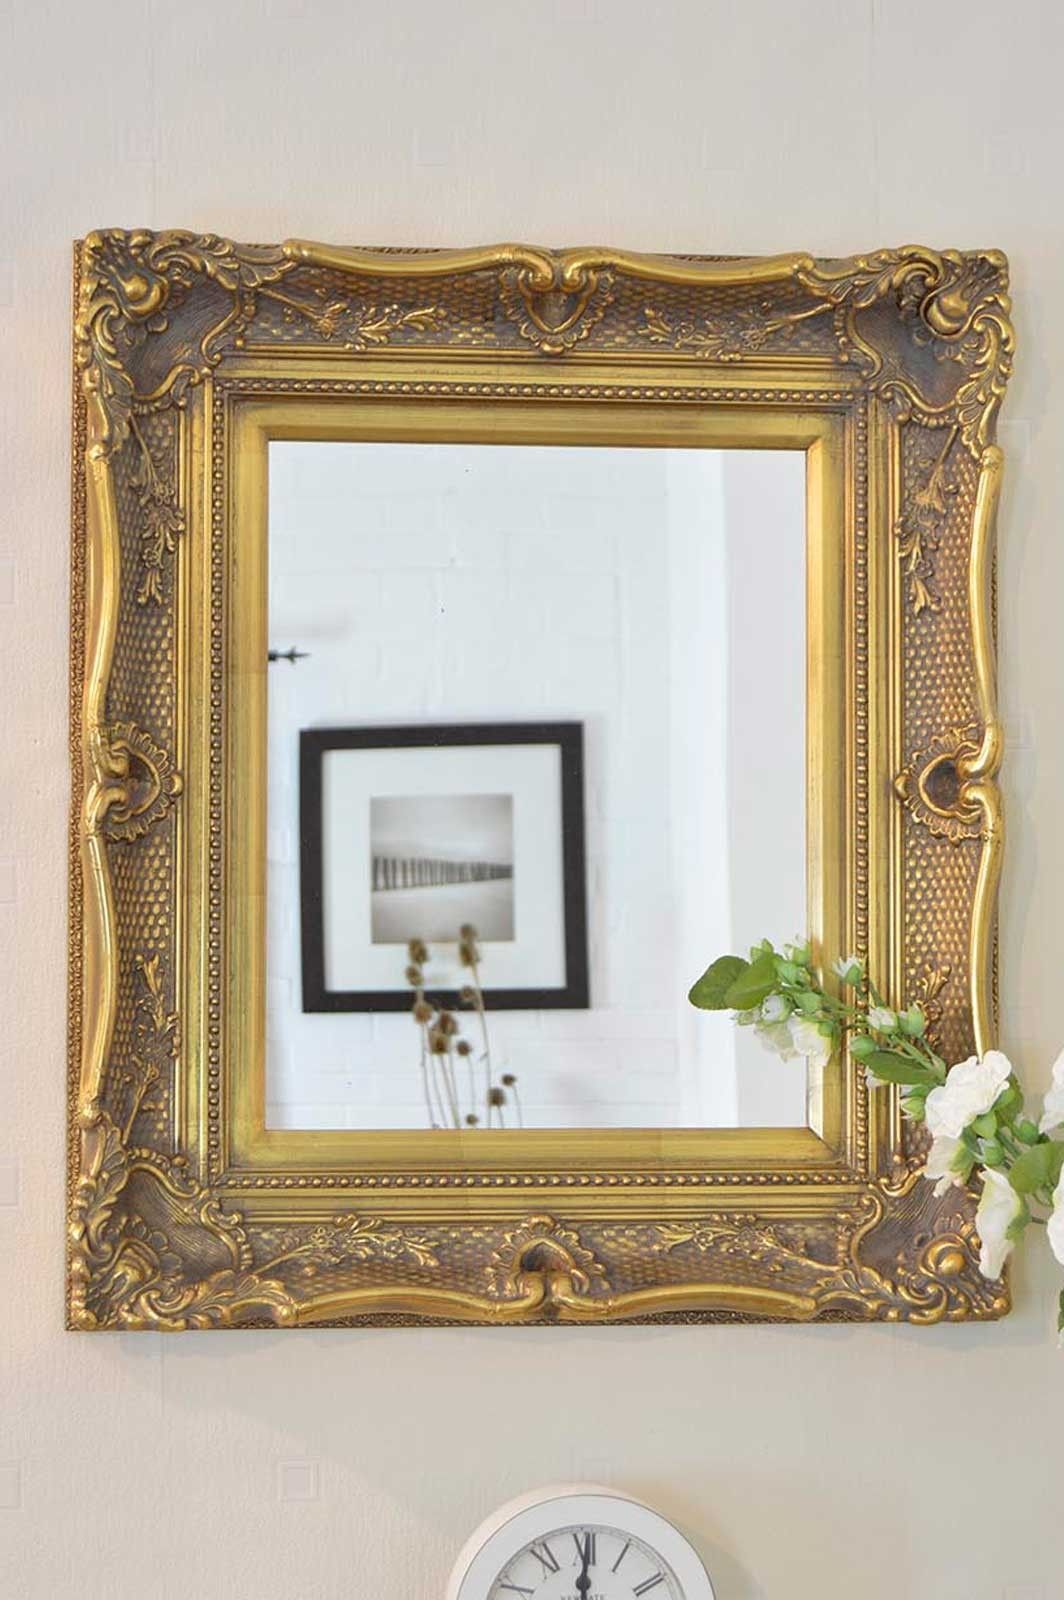 79cm X 69cm Large Gold Ornate Antique Design Big Wall Mirror Regarding Big Ornate Mirrors (View 15 of 15)